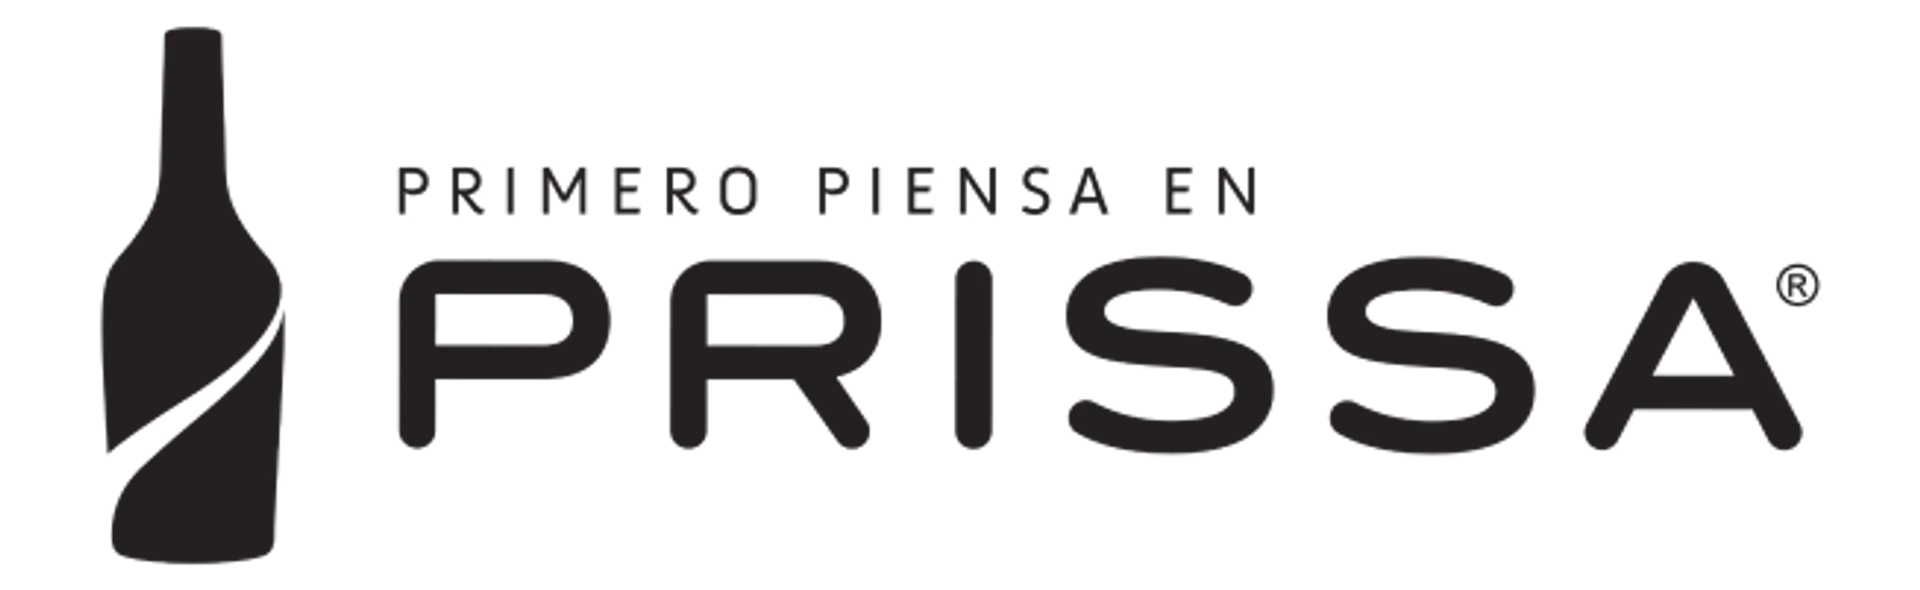 PRISSA logo de catálogo